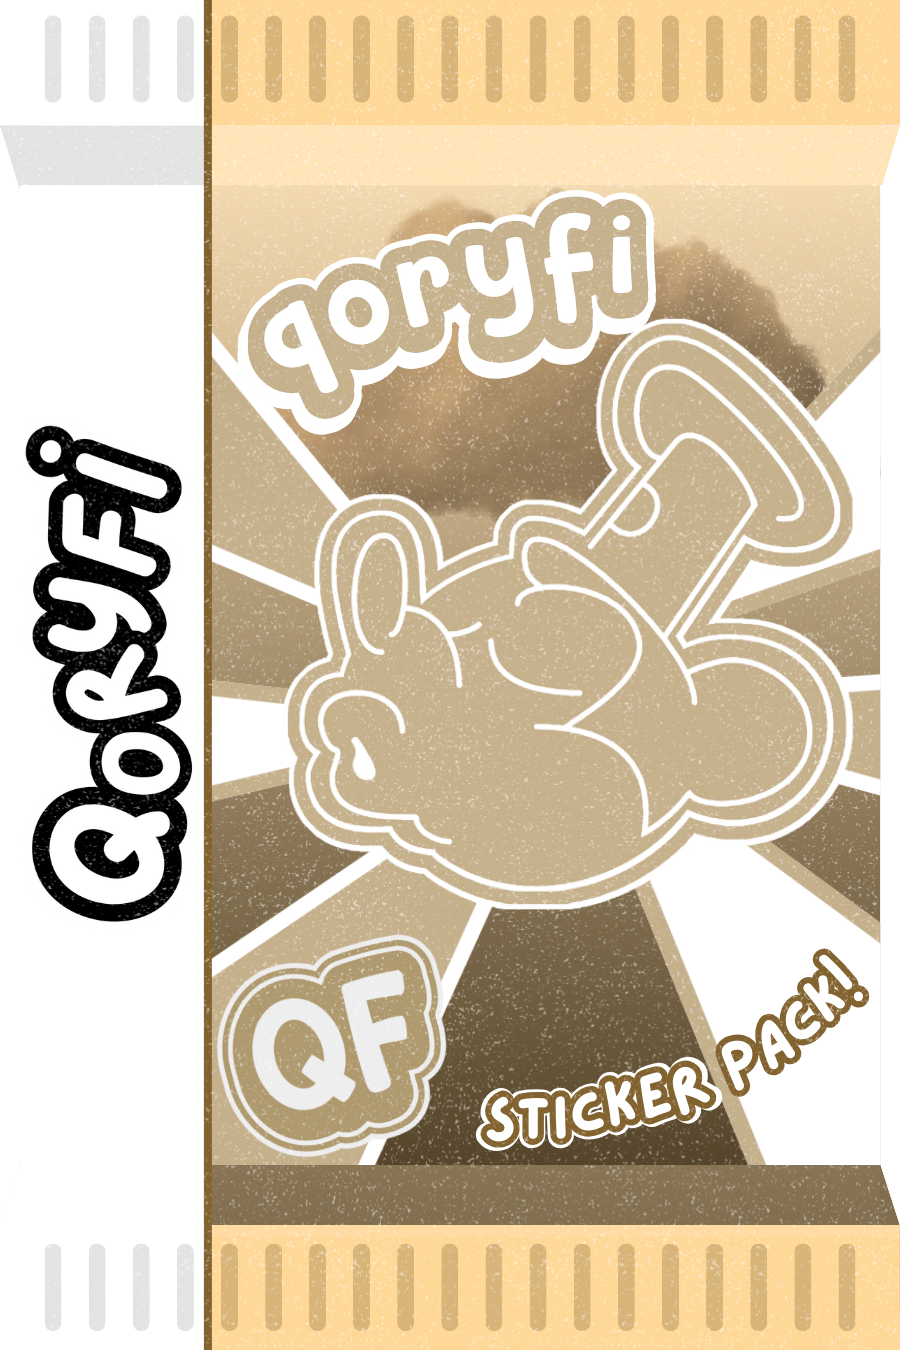 Qoryfi Sticker Pack!